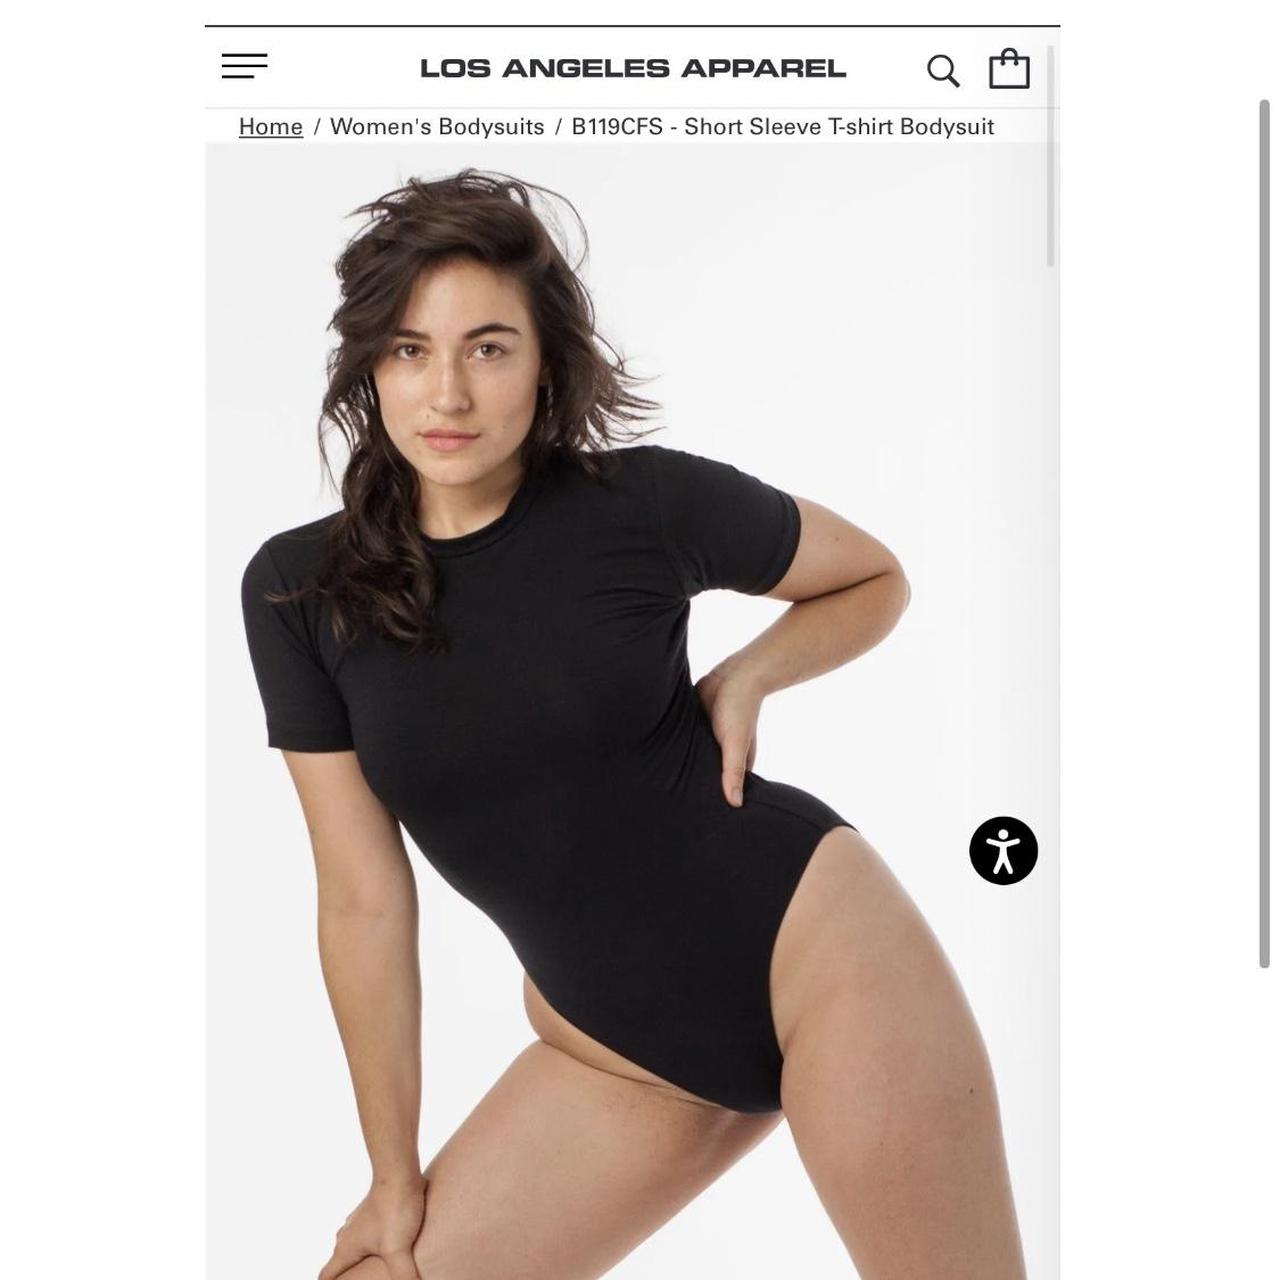 Los Angeles Apparel on Instagram: “Bodysuits. That's Los Angeles